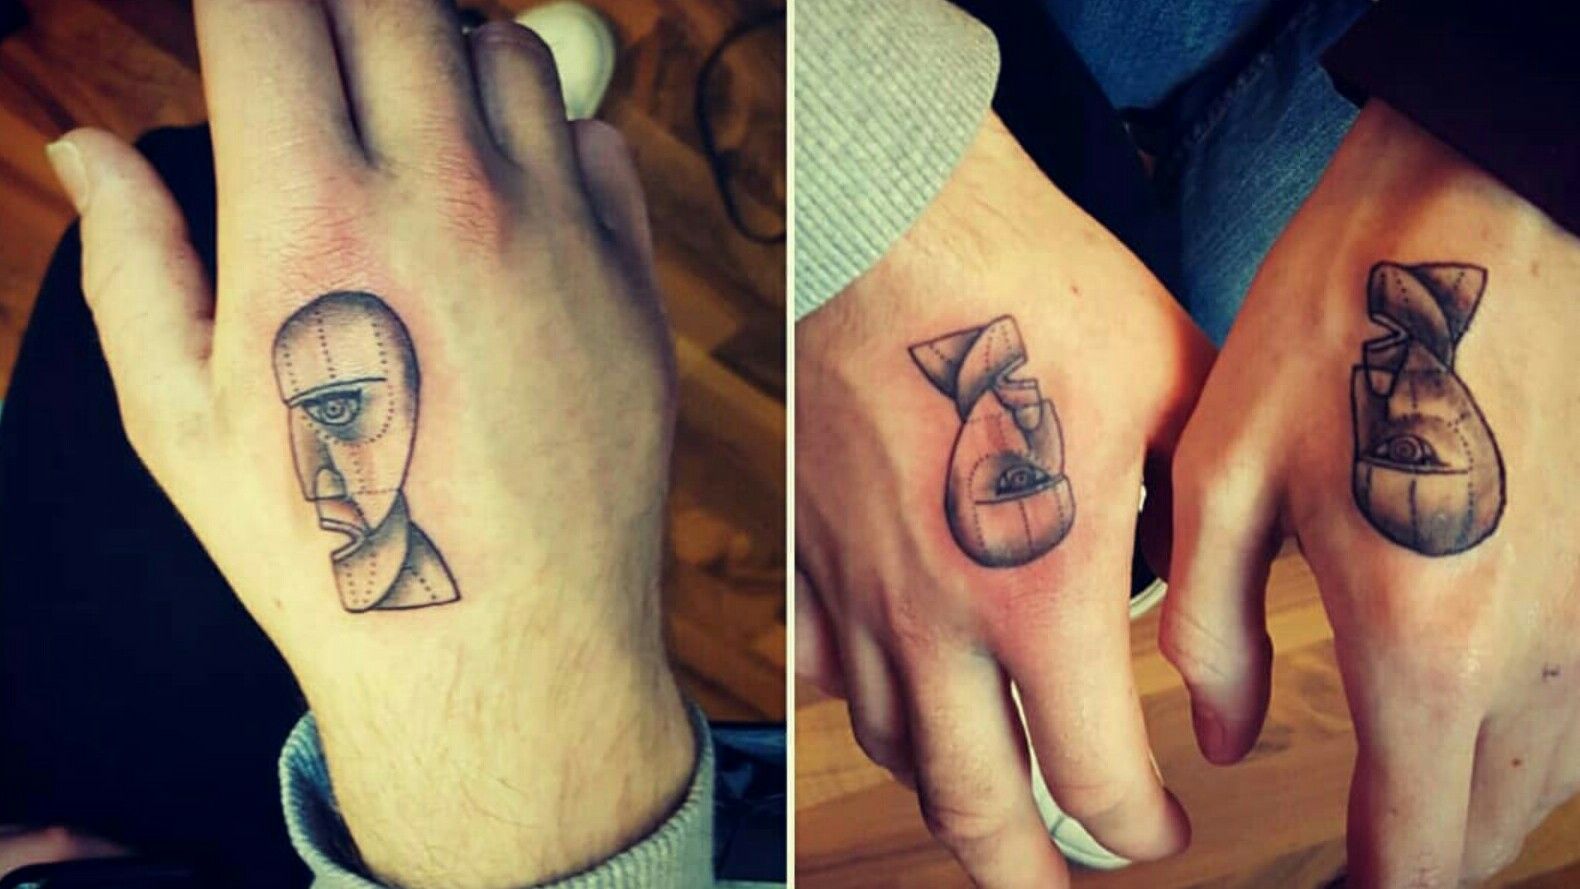 Alex Camargo  Division Bell  Pink Floyd   tattoo tattoos tatuagens  tatuagem tattooart art artist artes pinkfloyd divisionbell fkirons  spectraflux  Facebook